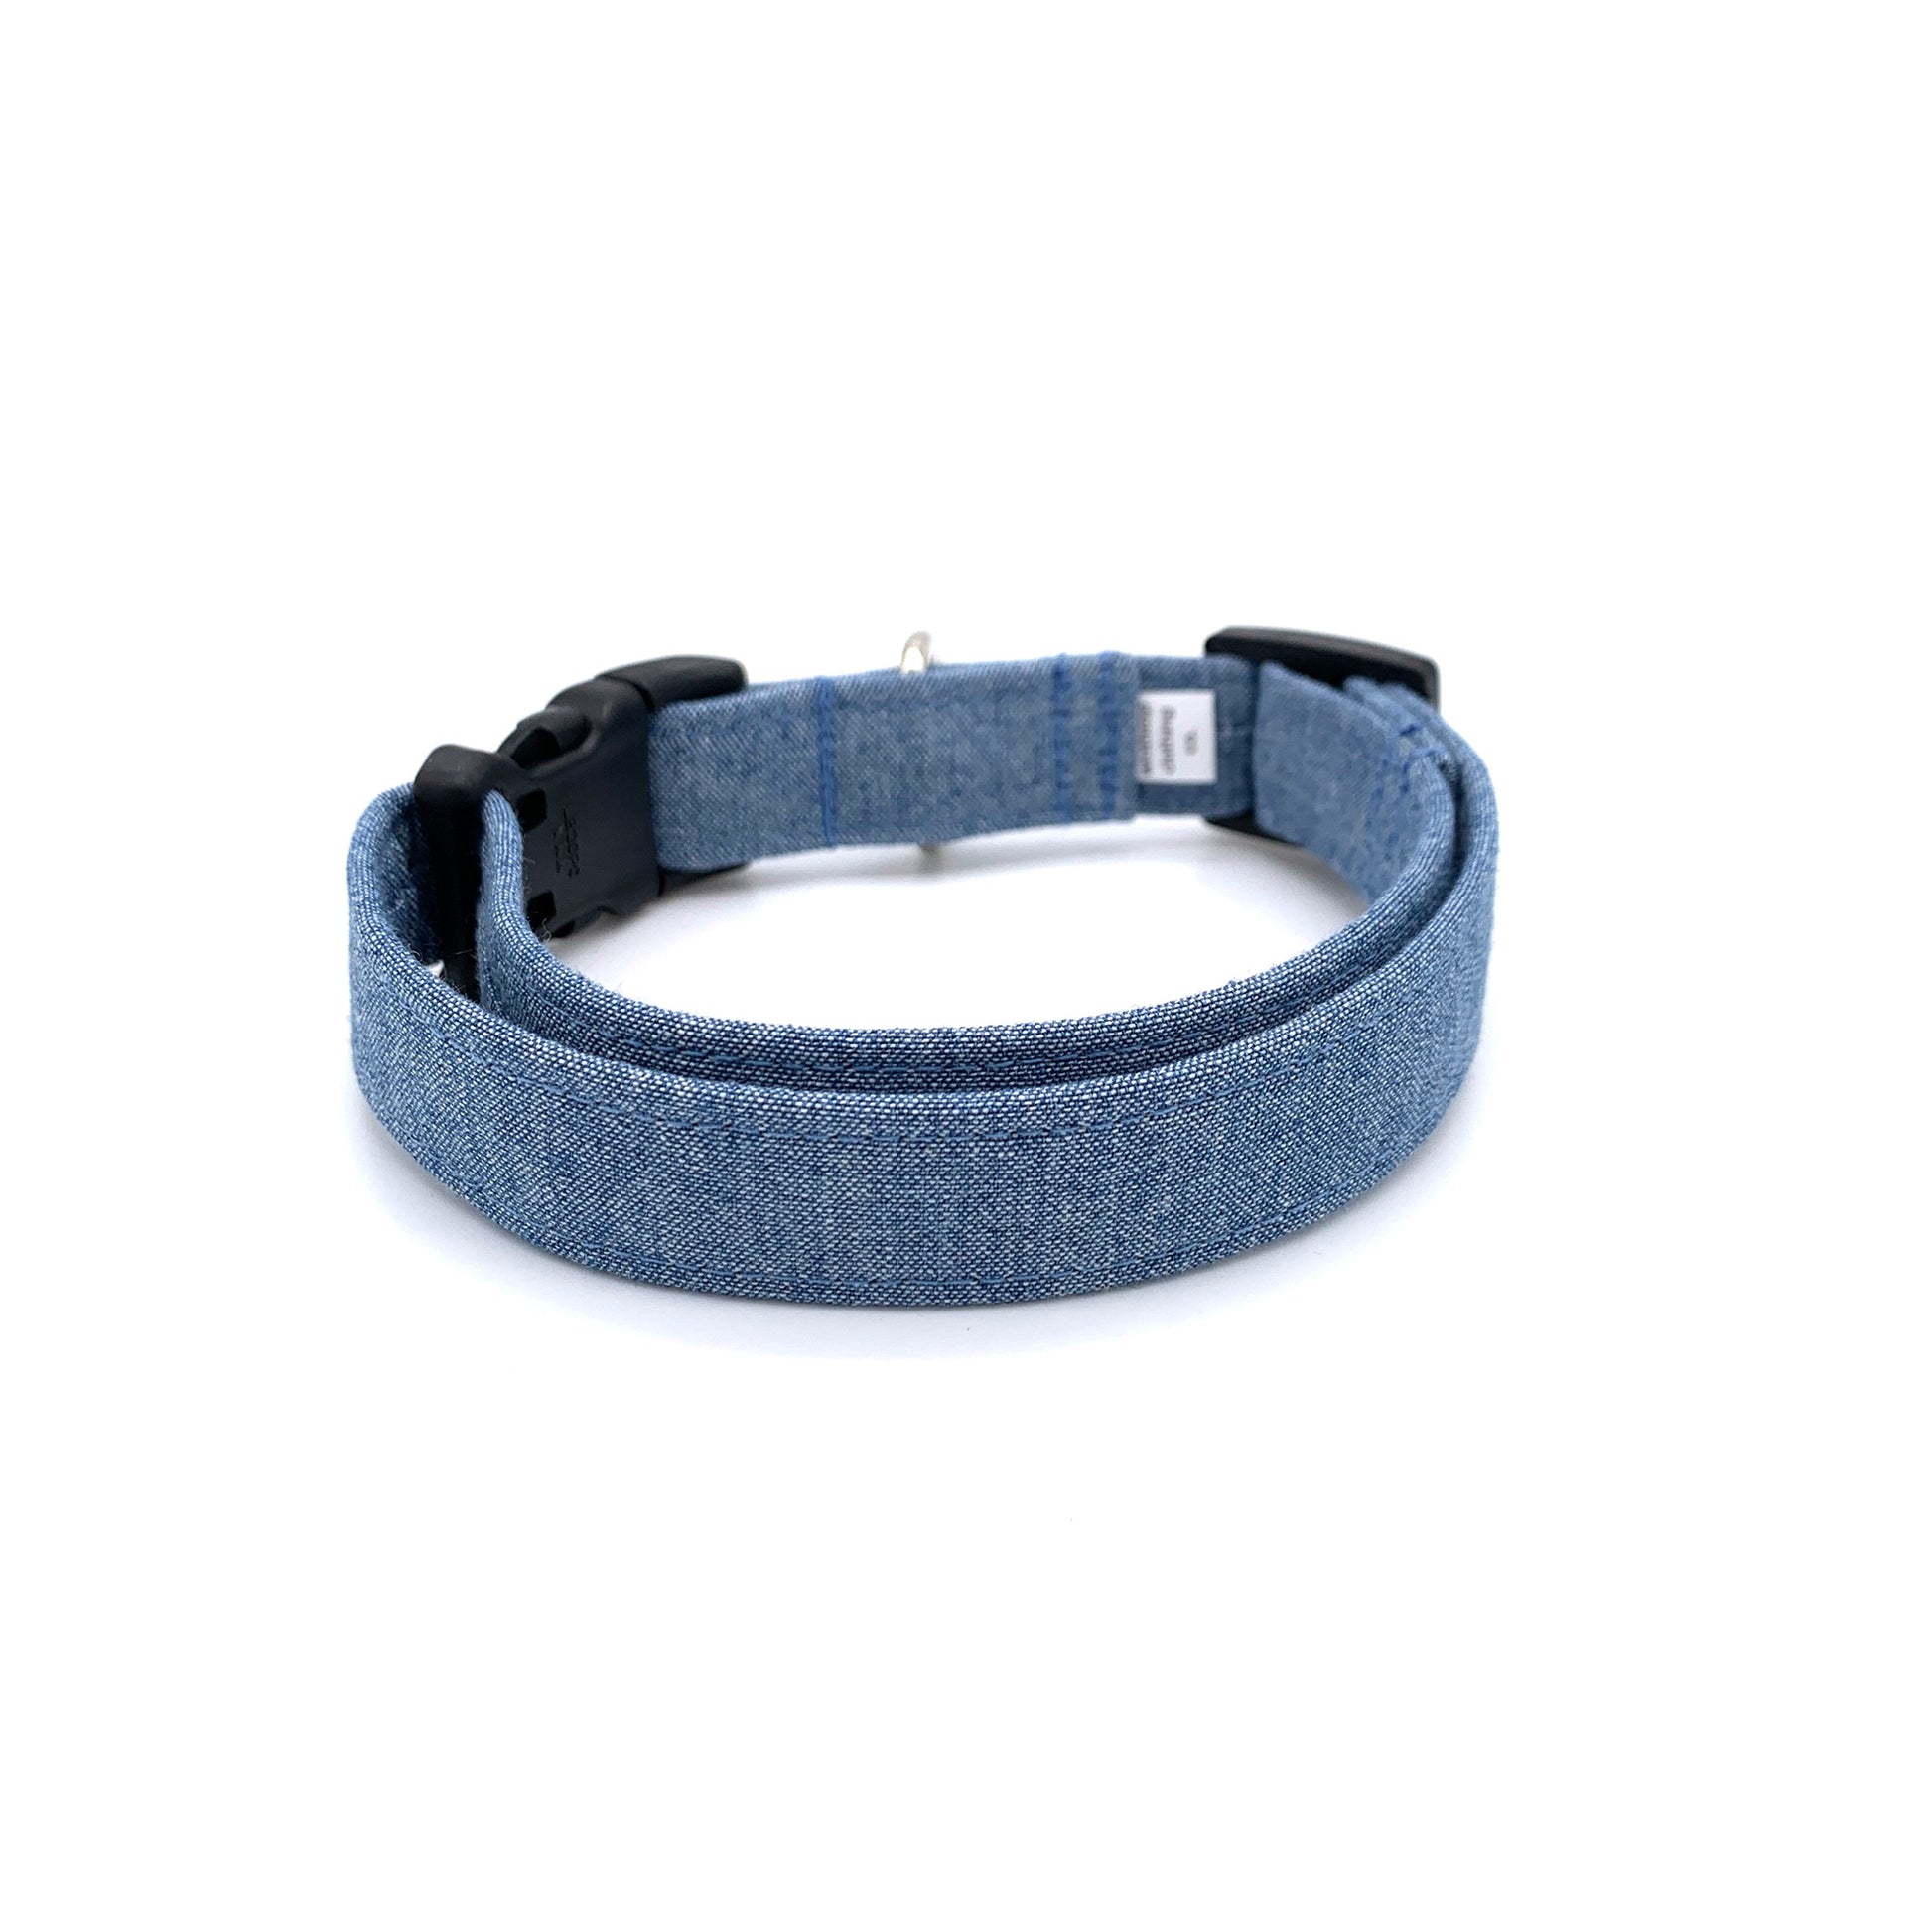 Light Blue Chambray Dog Collar